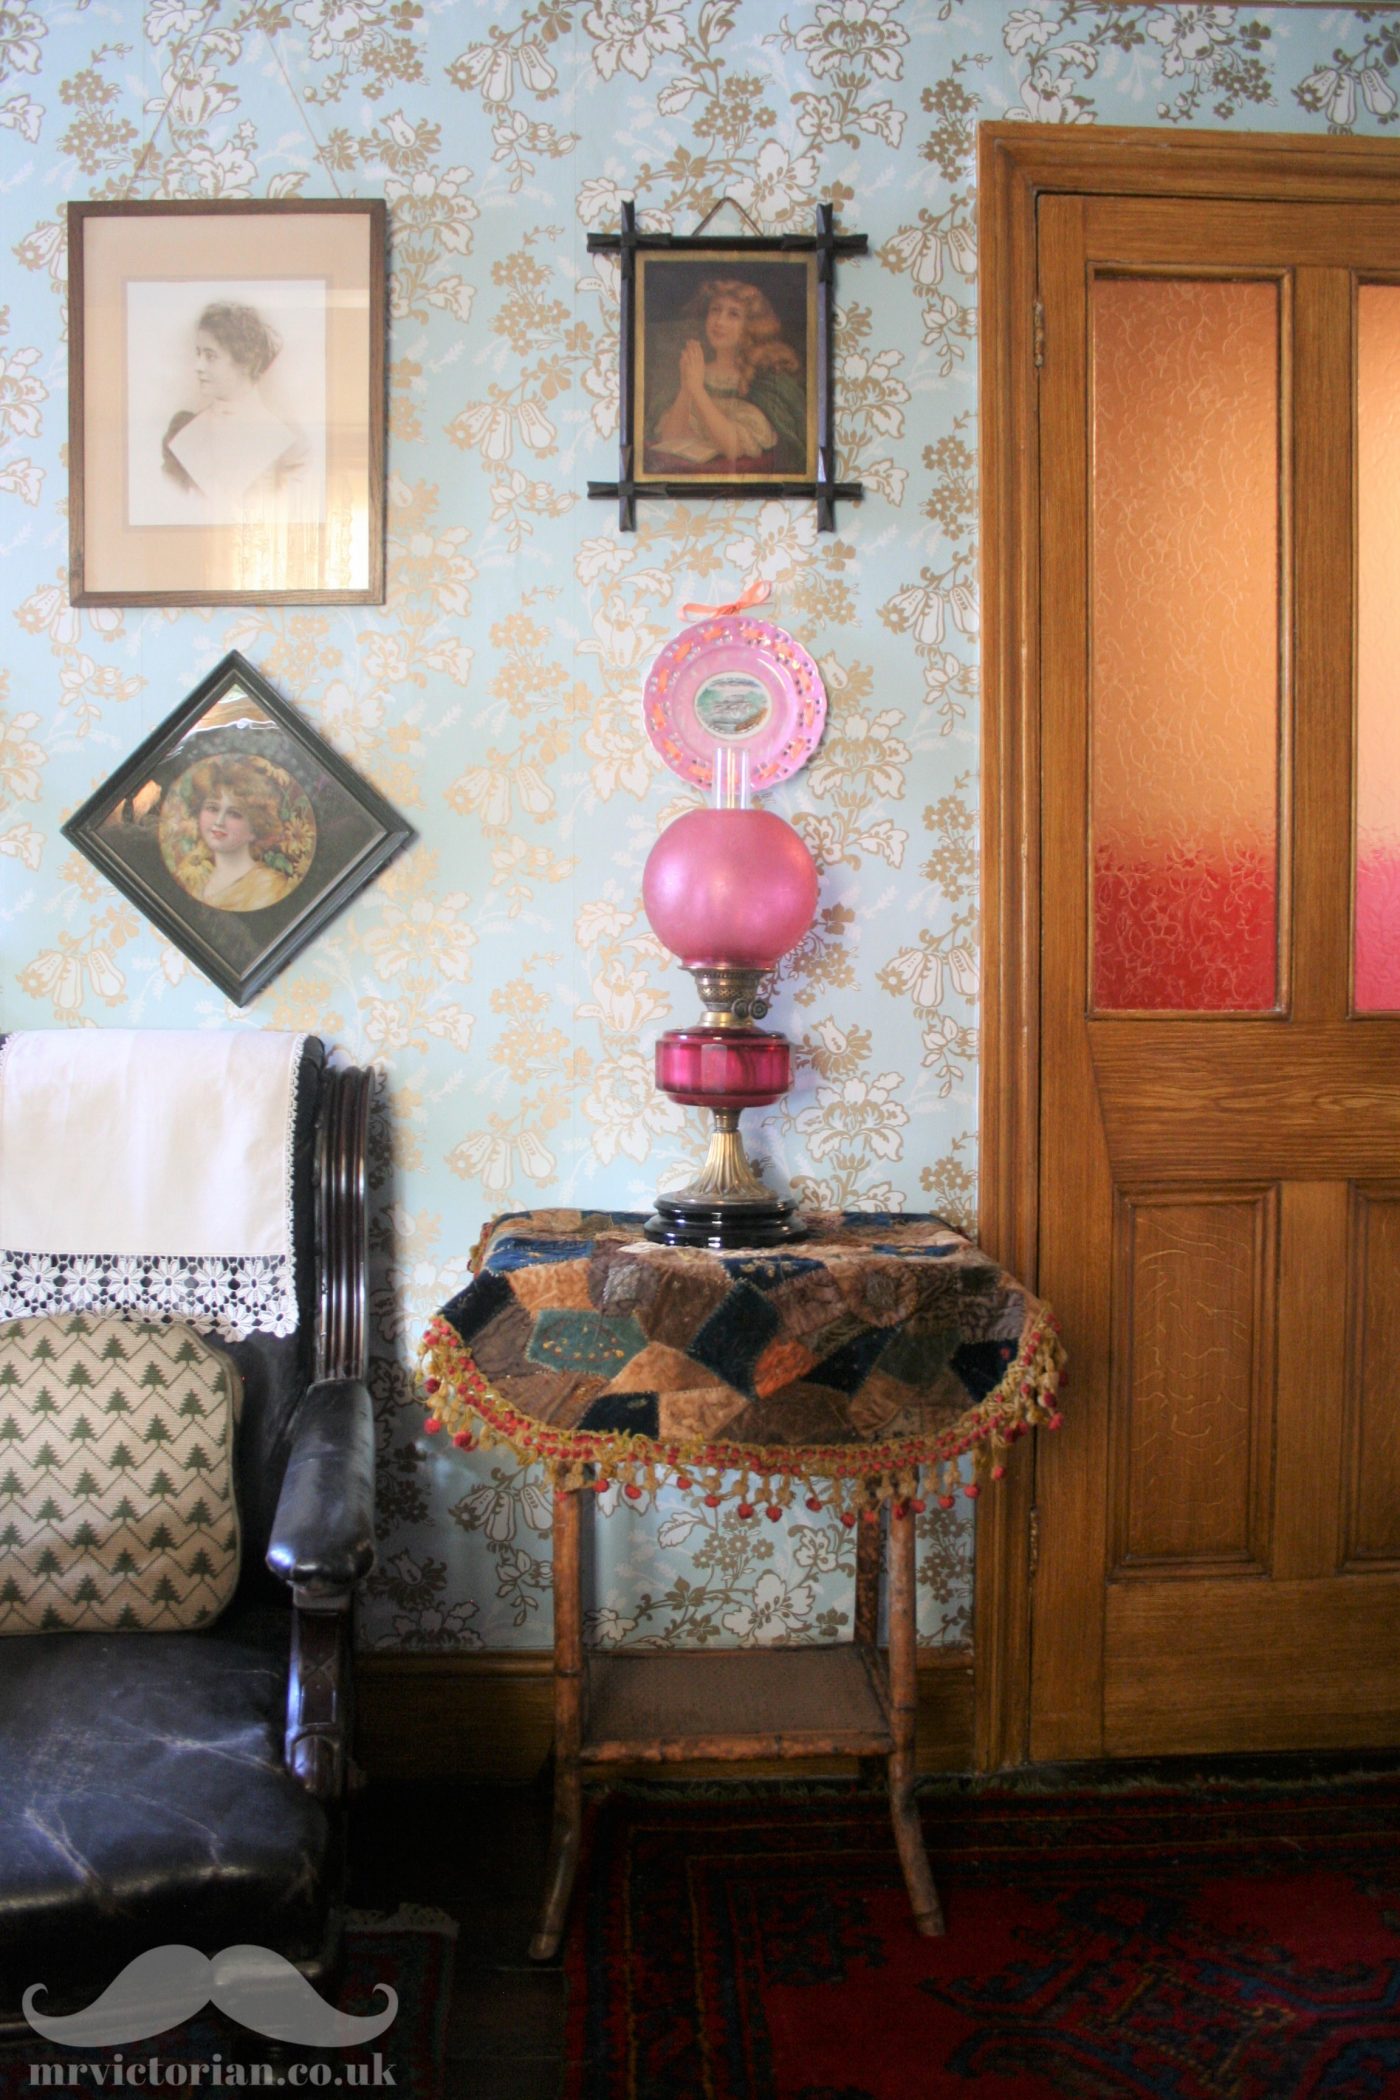 Victorian patchwork tablecloth parlour interior cranberry oil lamp